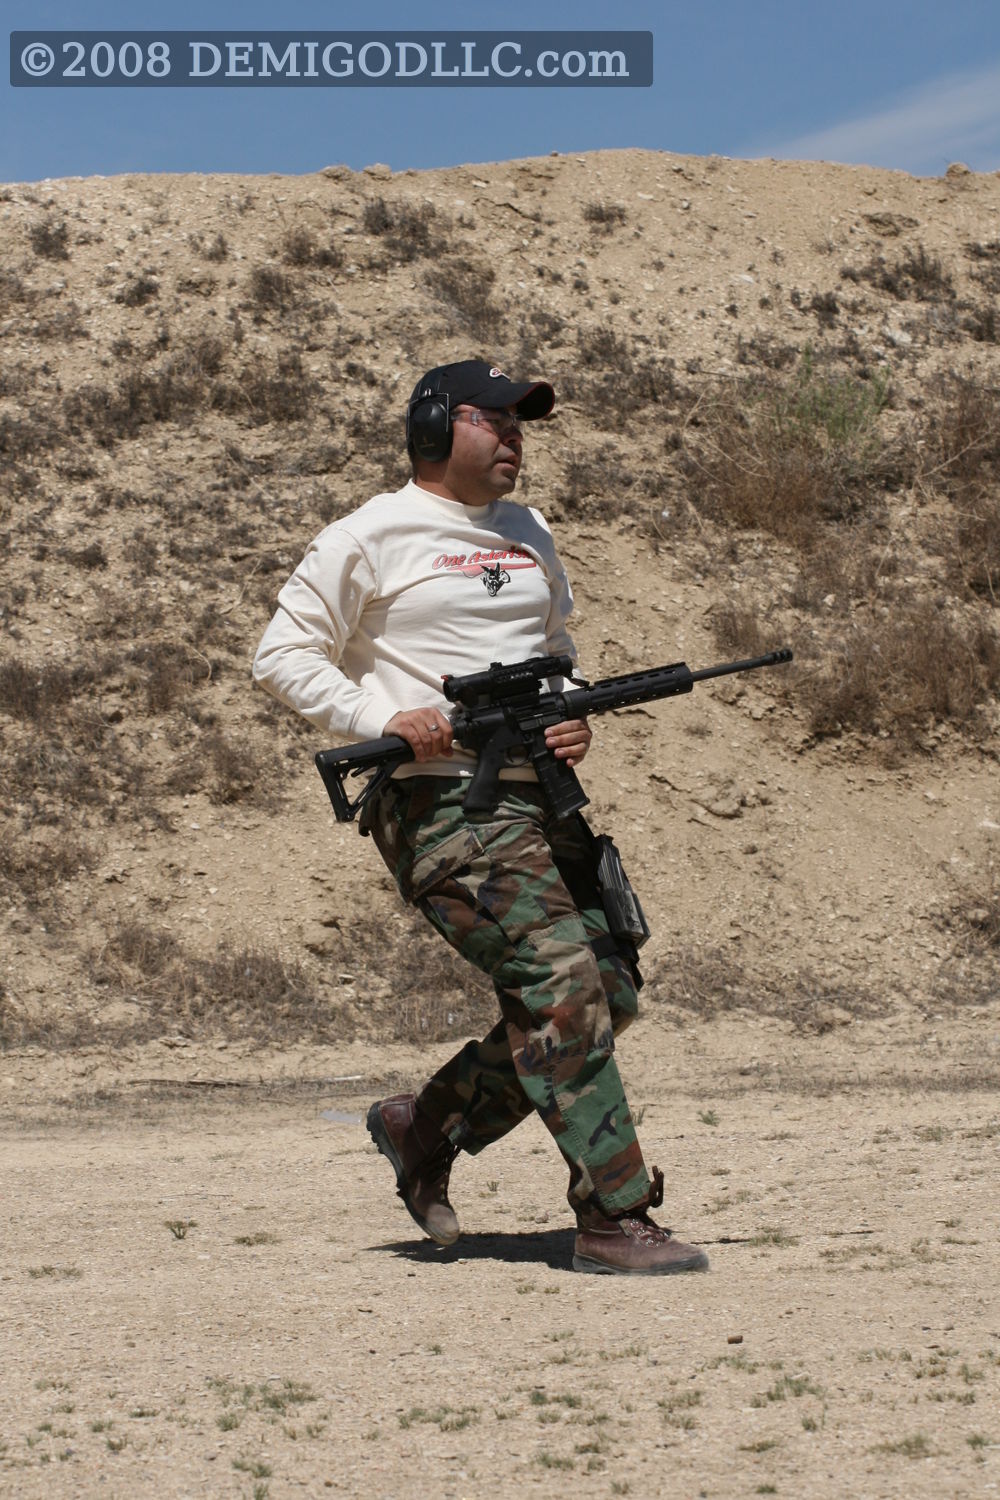 Pueblo Carbine Match, May 2008
, photo 